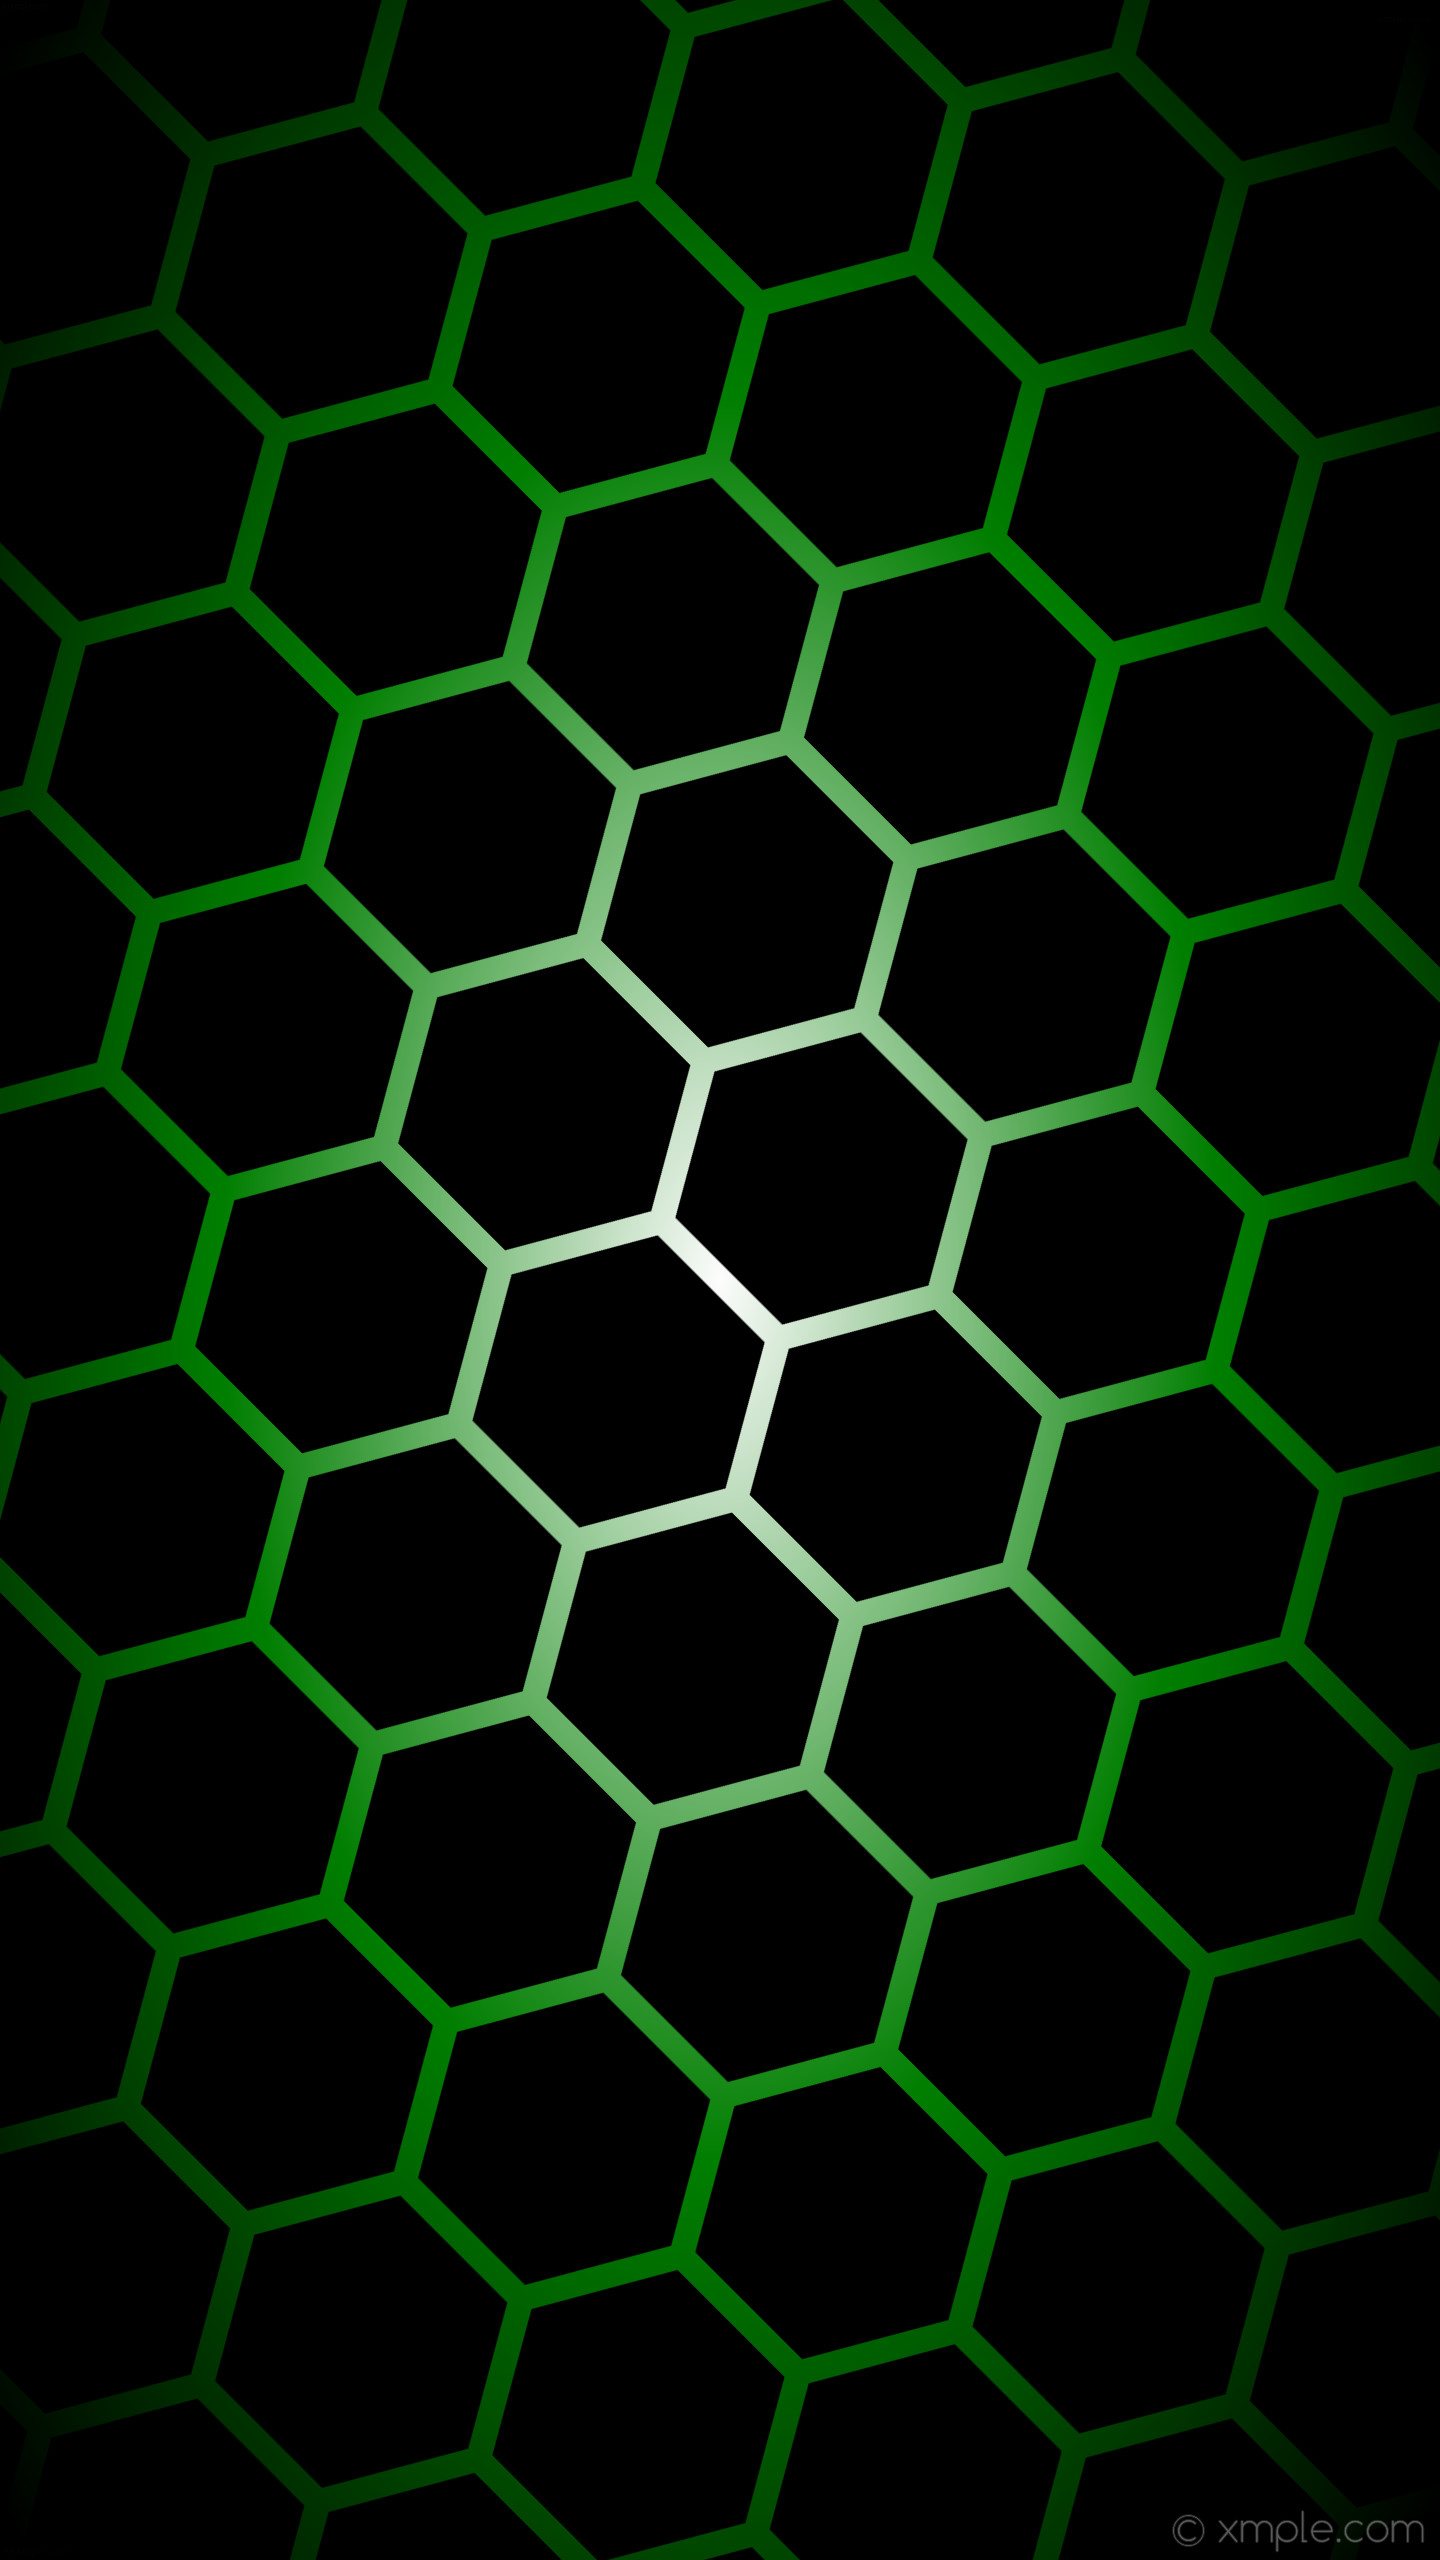 1440x2560 wallpaper glow hexagon green gradient white black #000000 #ffffff #008000  diagonal 45Â°